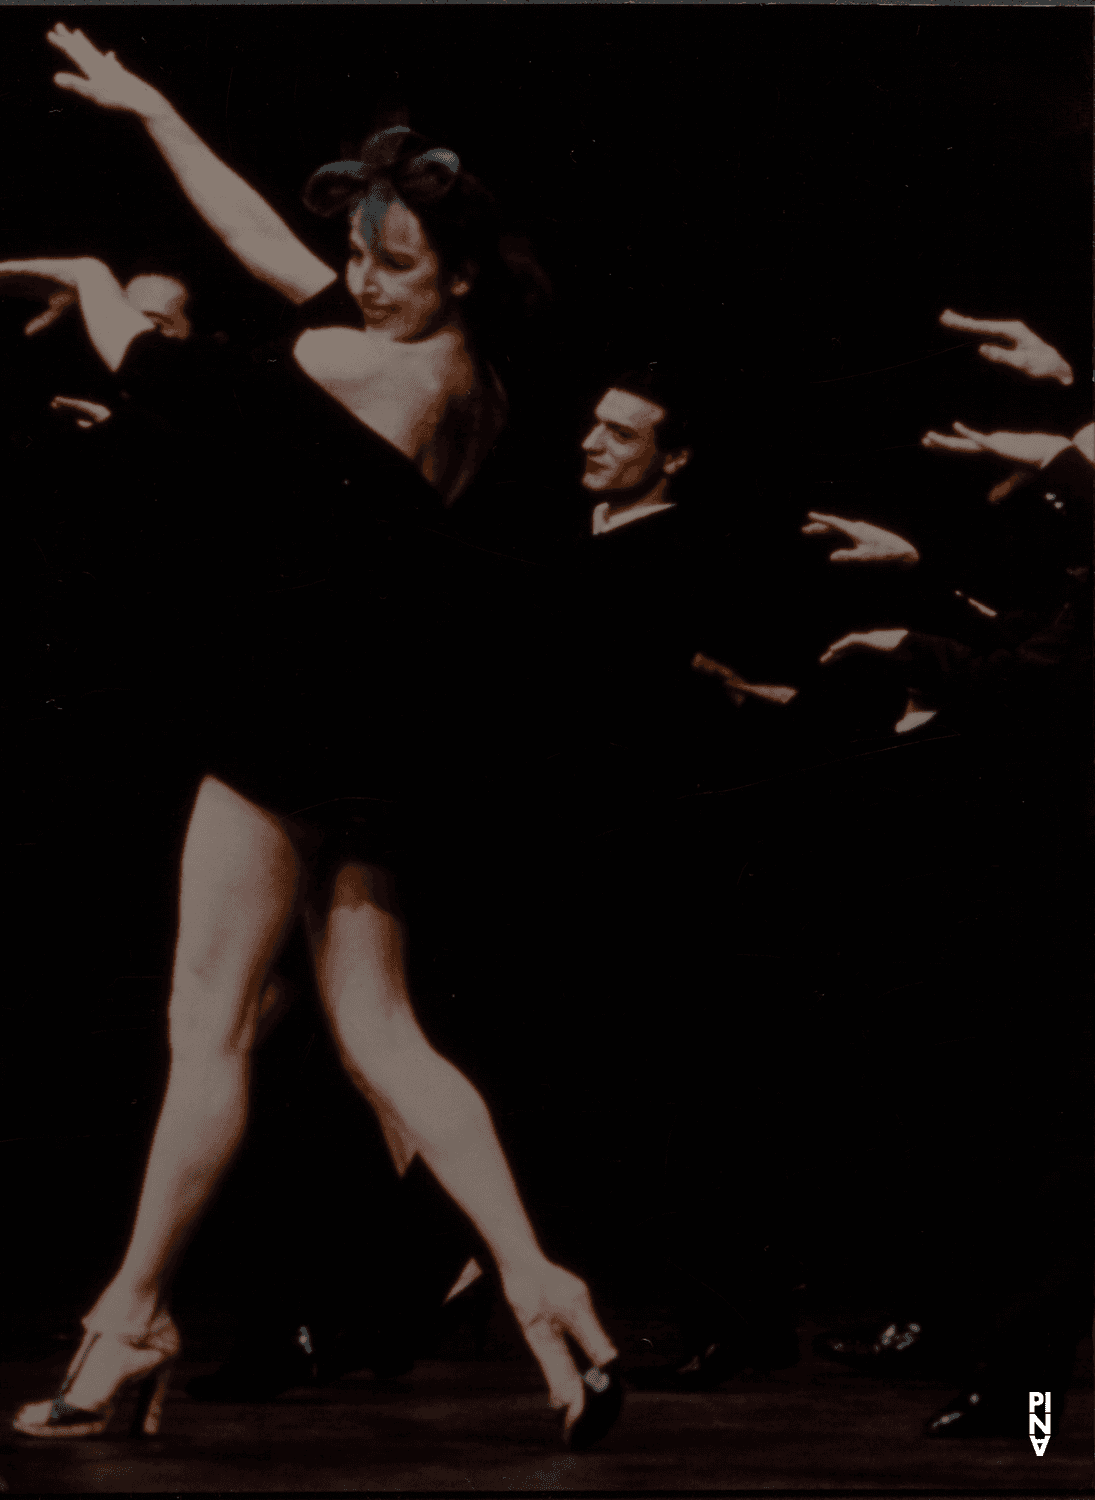 Anne Martin and Antonio Carallo in “Viktor” by Pina Bausch at Teatro La Fenice Venedig, season 1991/92